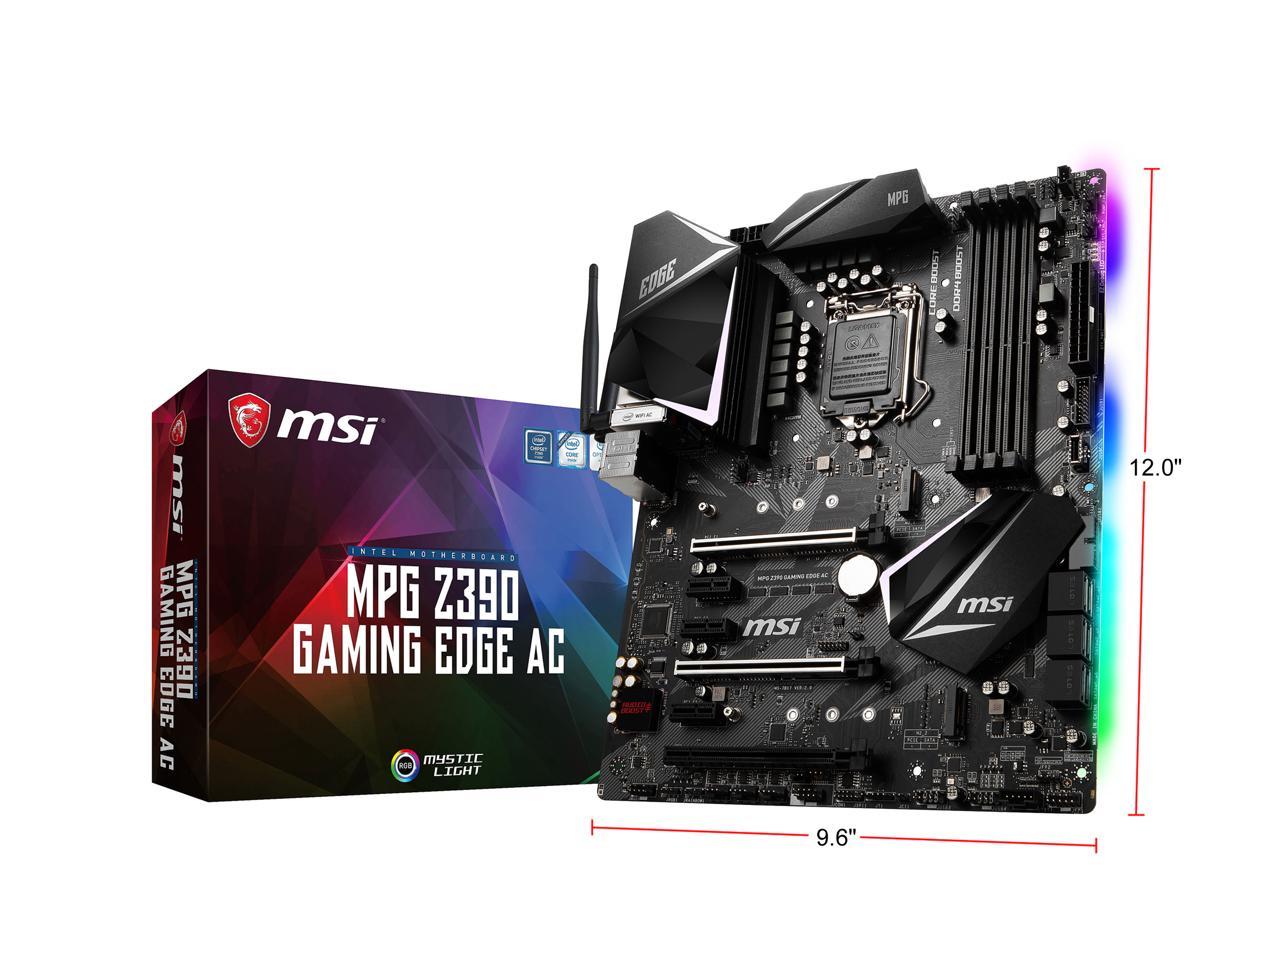 Msi Mpg Z390 Gaming Edge Ac Lga 1151 (300 Series) Intel Z390 Sata 6Gb/S Atx Intel Motherboard